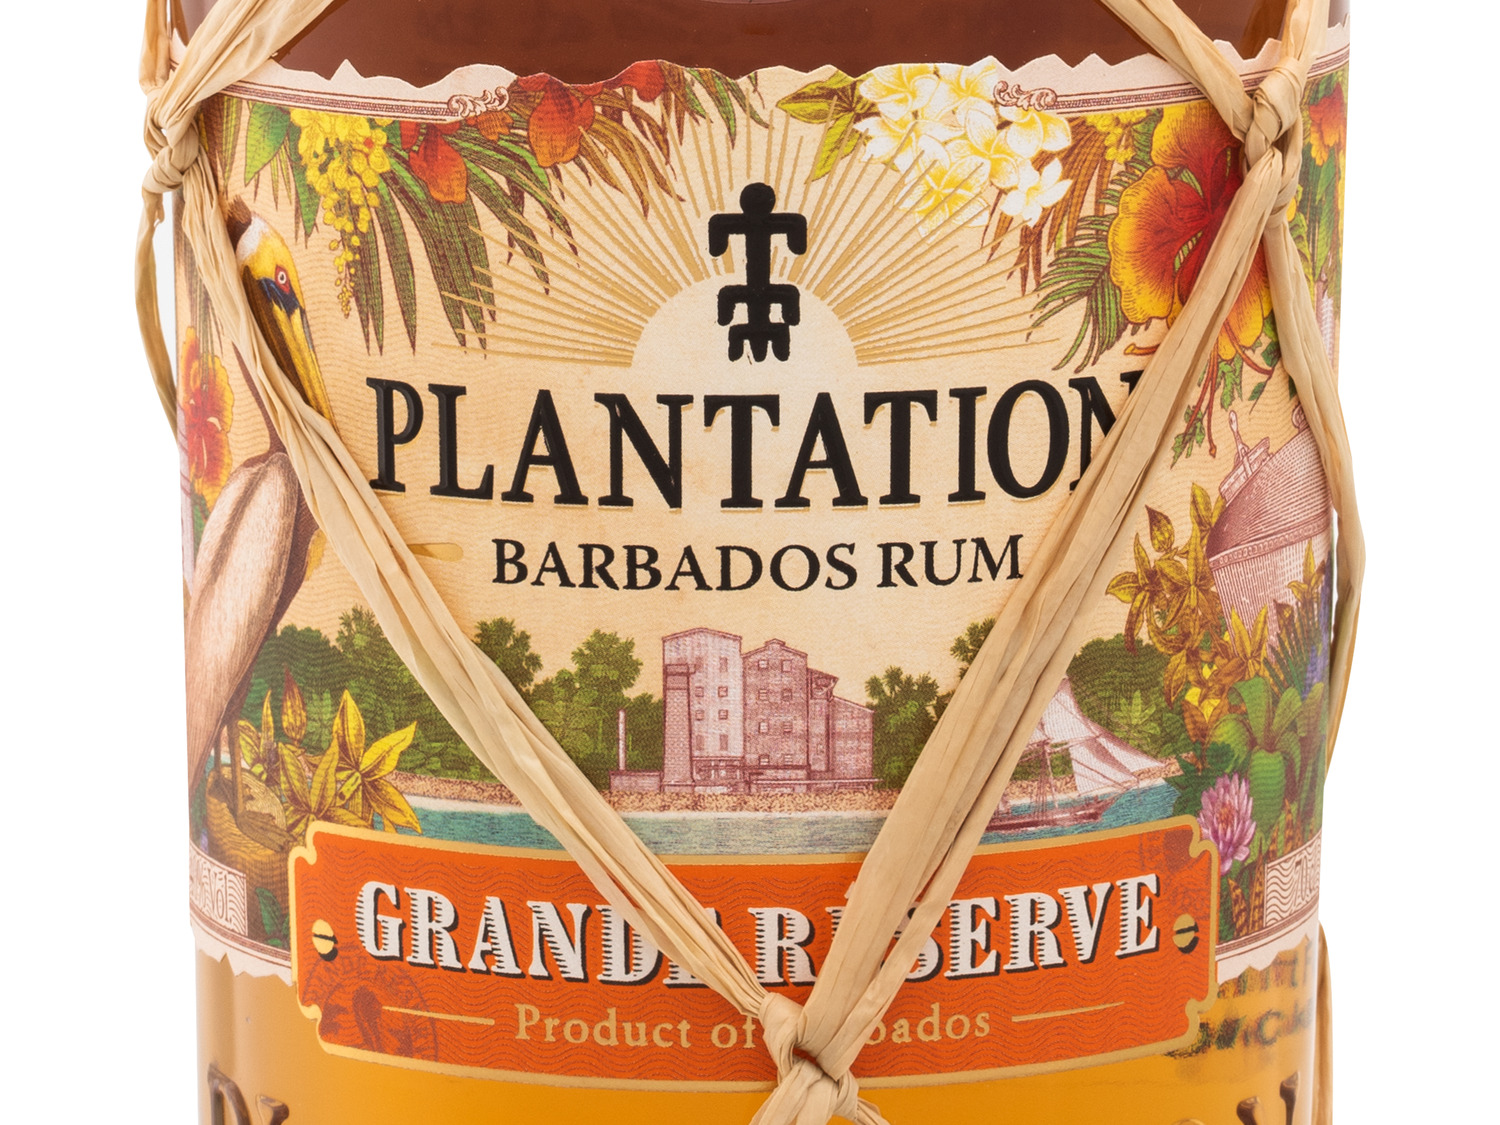 Plantation Barbados LIDL Grande Vol Rum 40% | Réserve